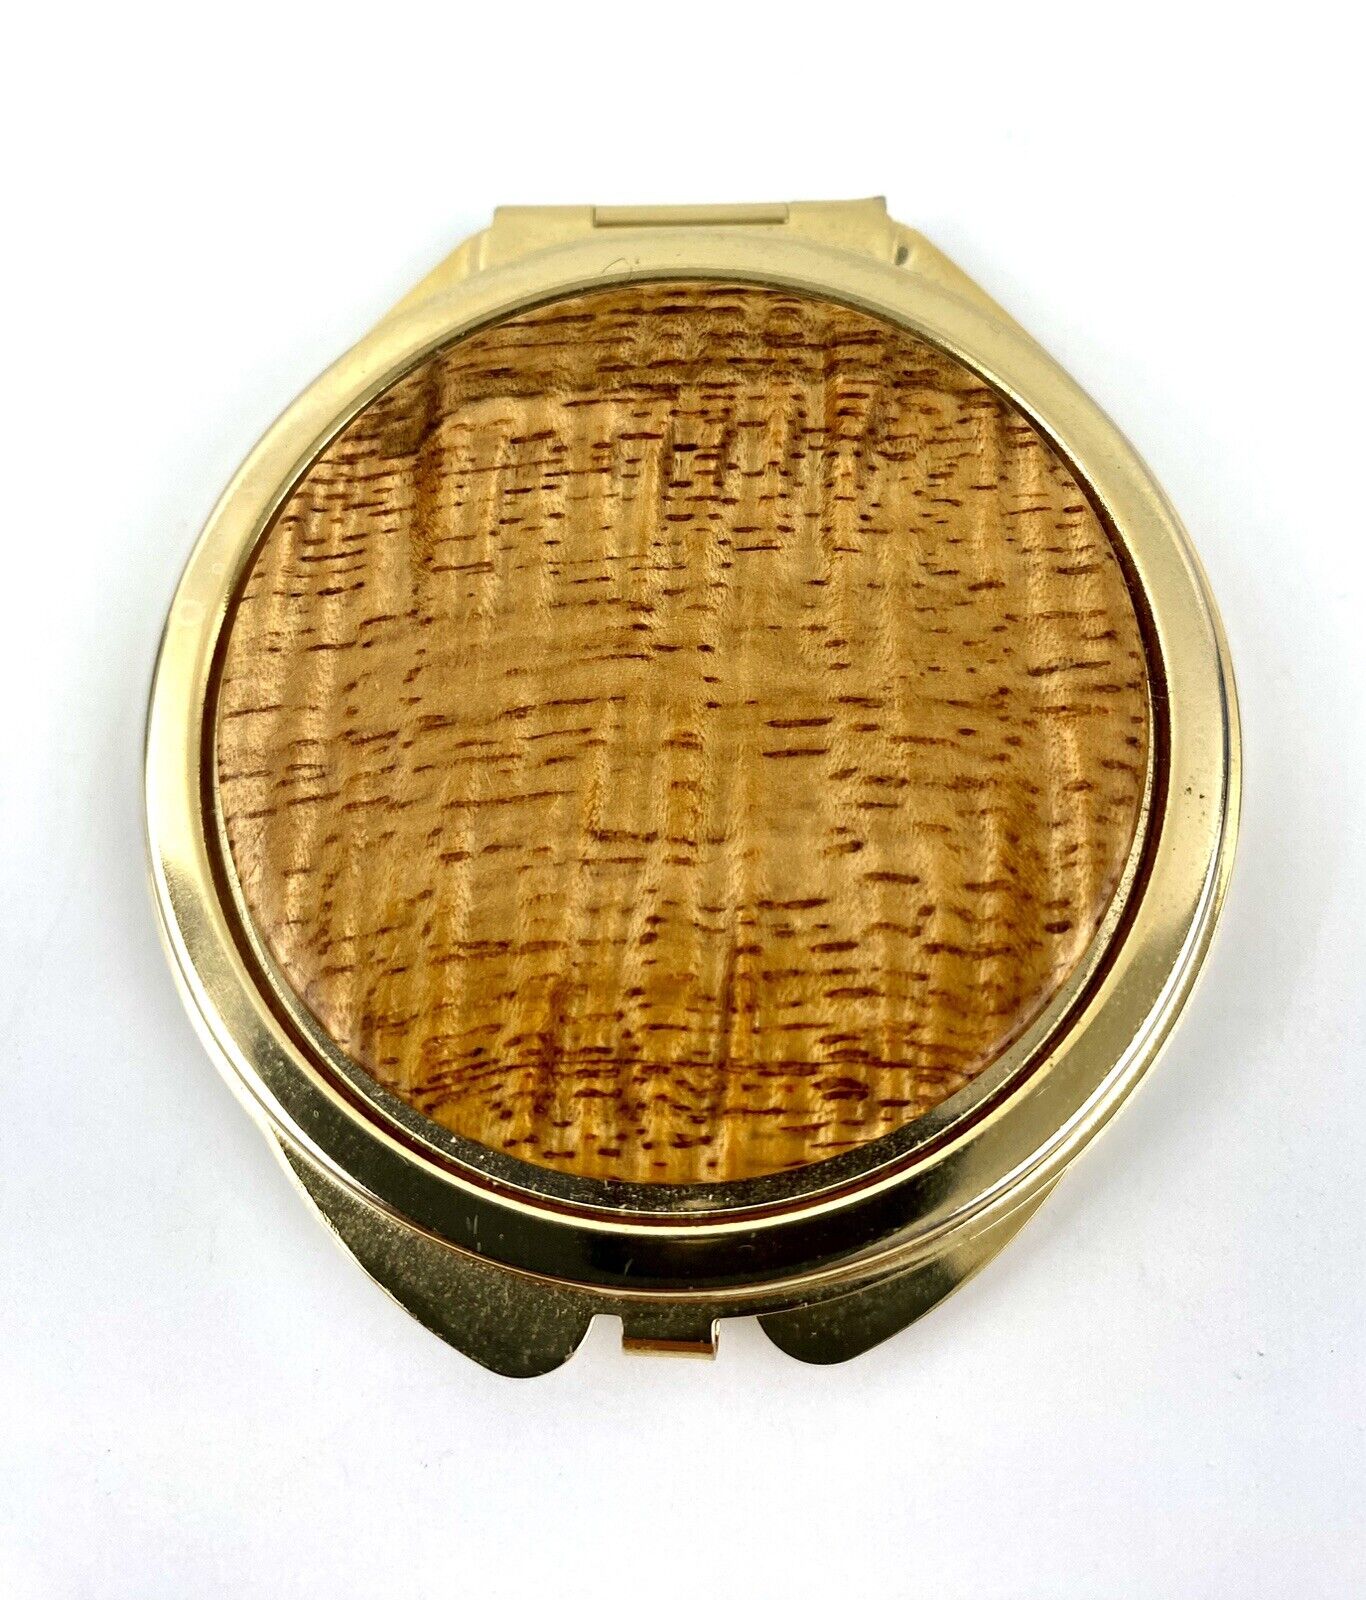 Hawaiian Curly Koa Wood With Golden Material Mirror.Size of It:2 1/2” Diameter